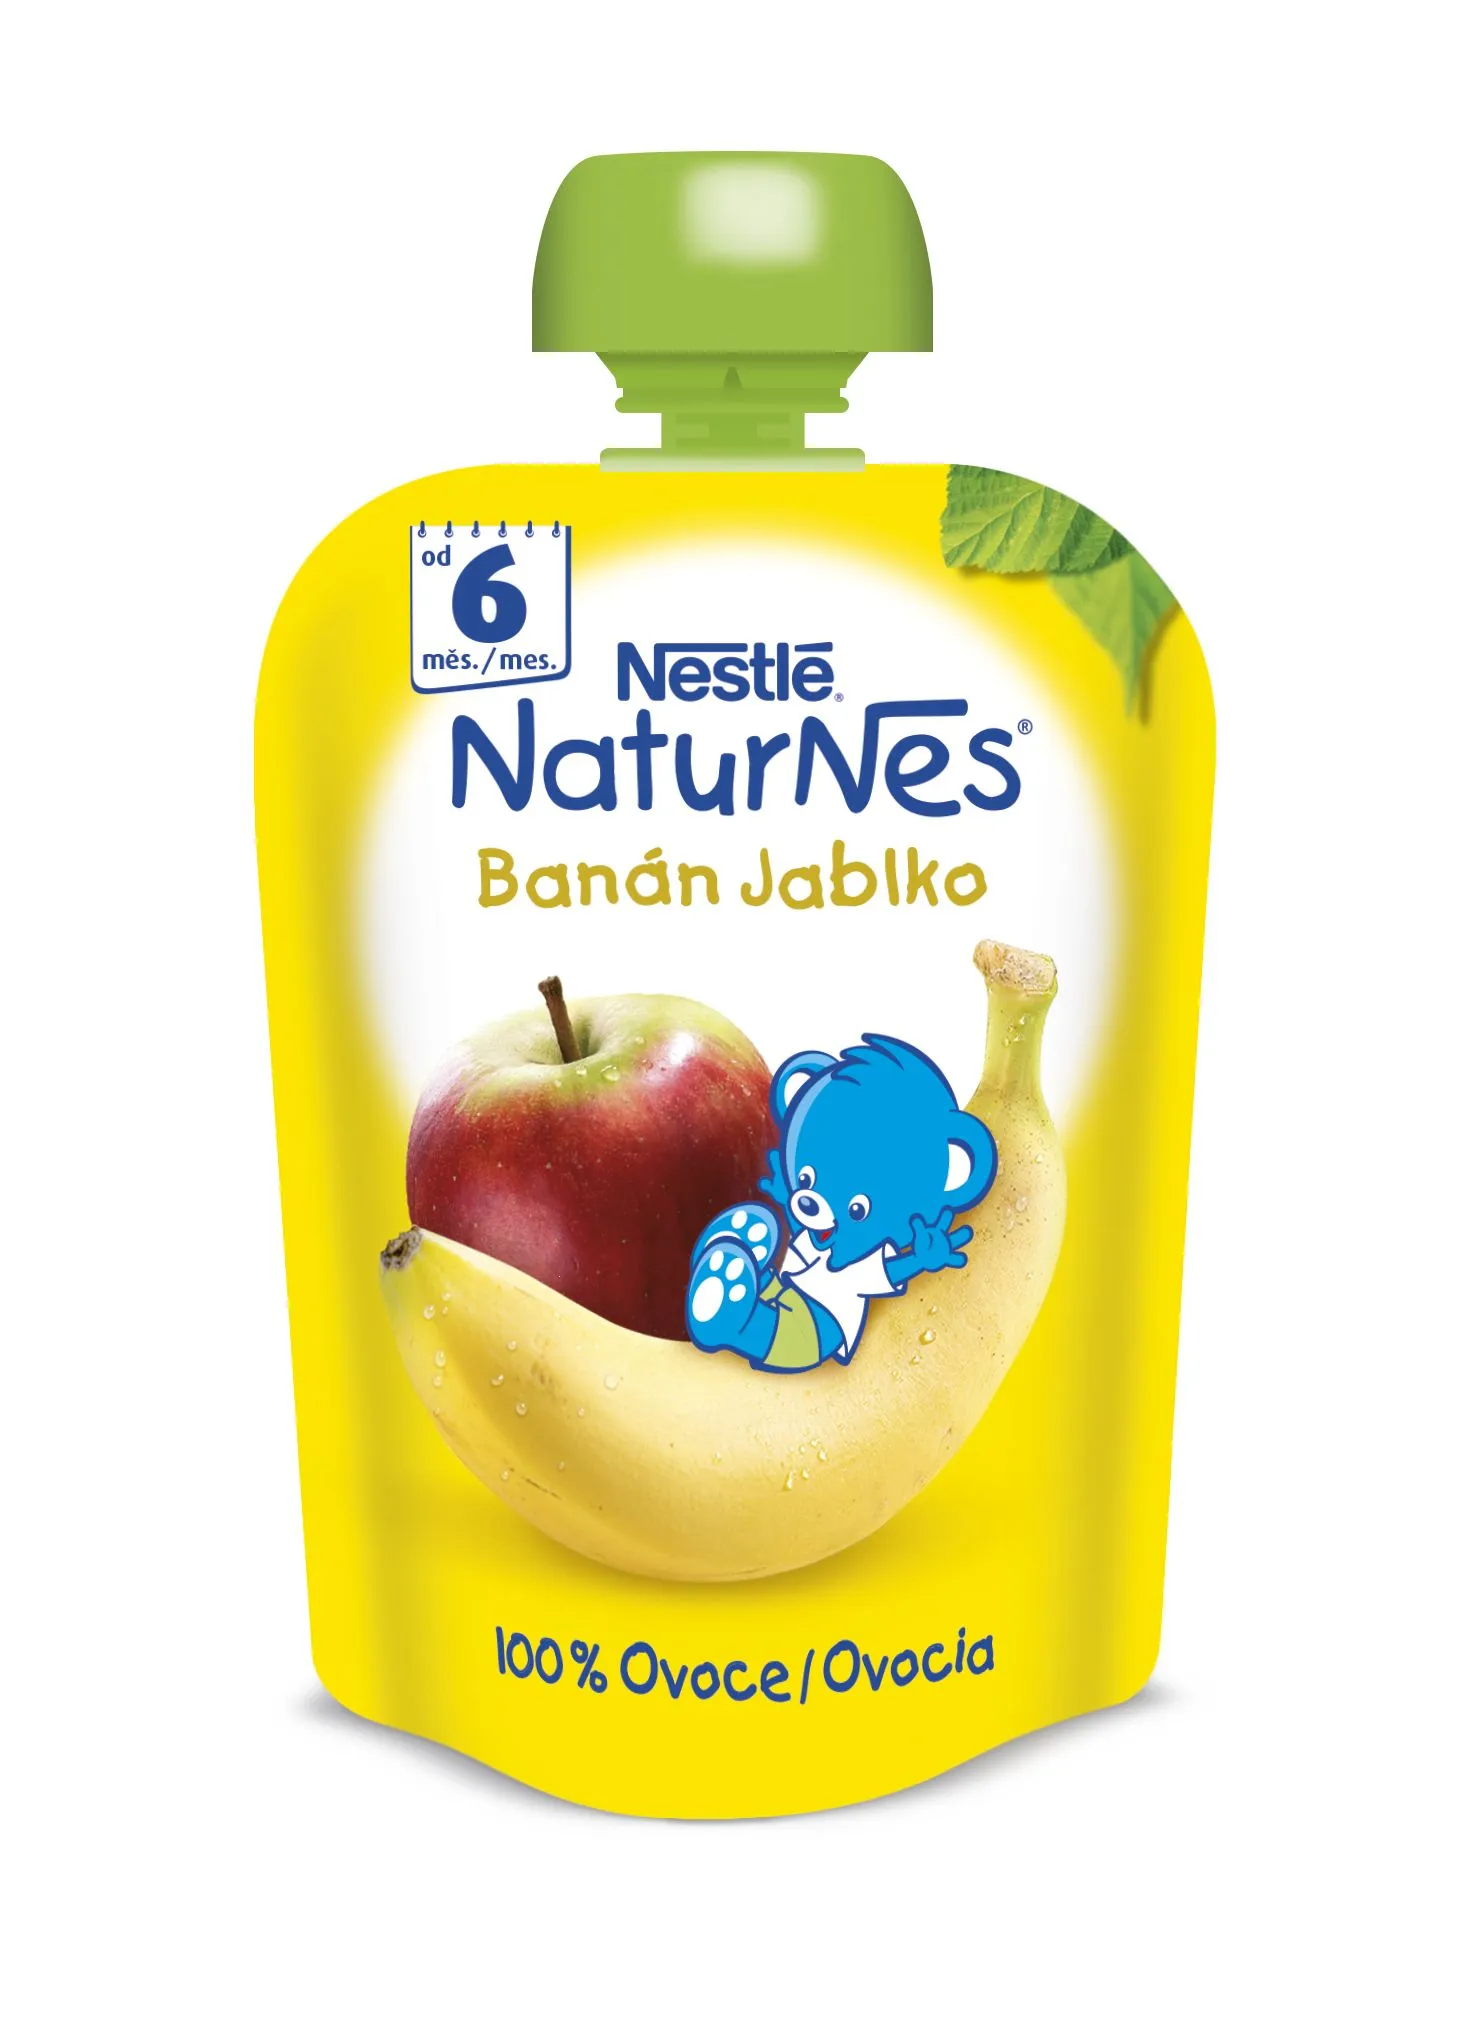 Nestlé Naturnes banán jablko kapsička 90 g